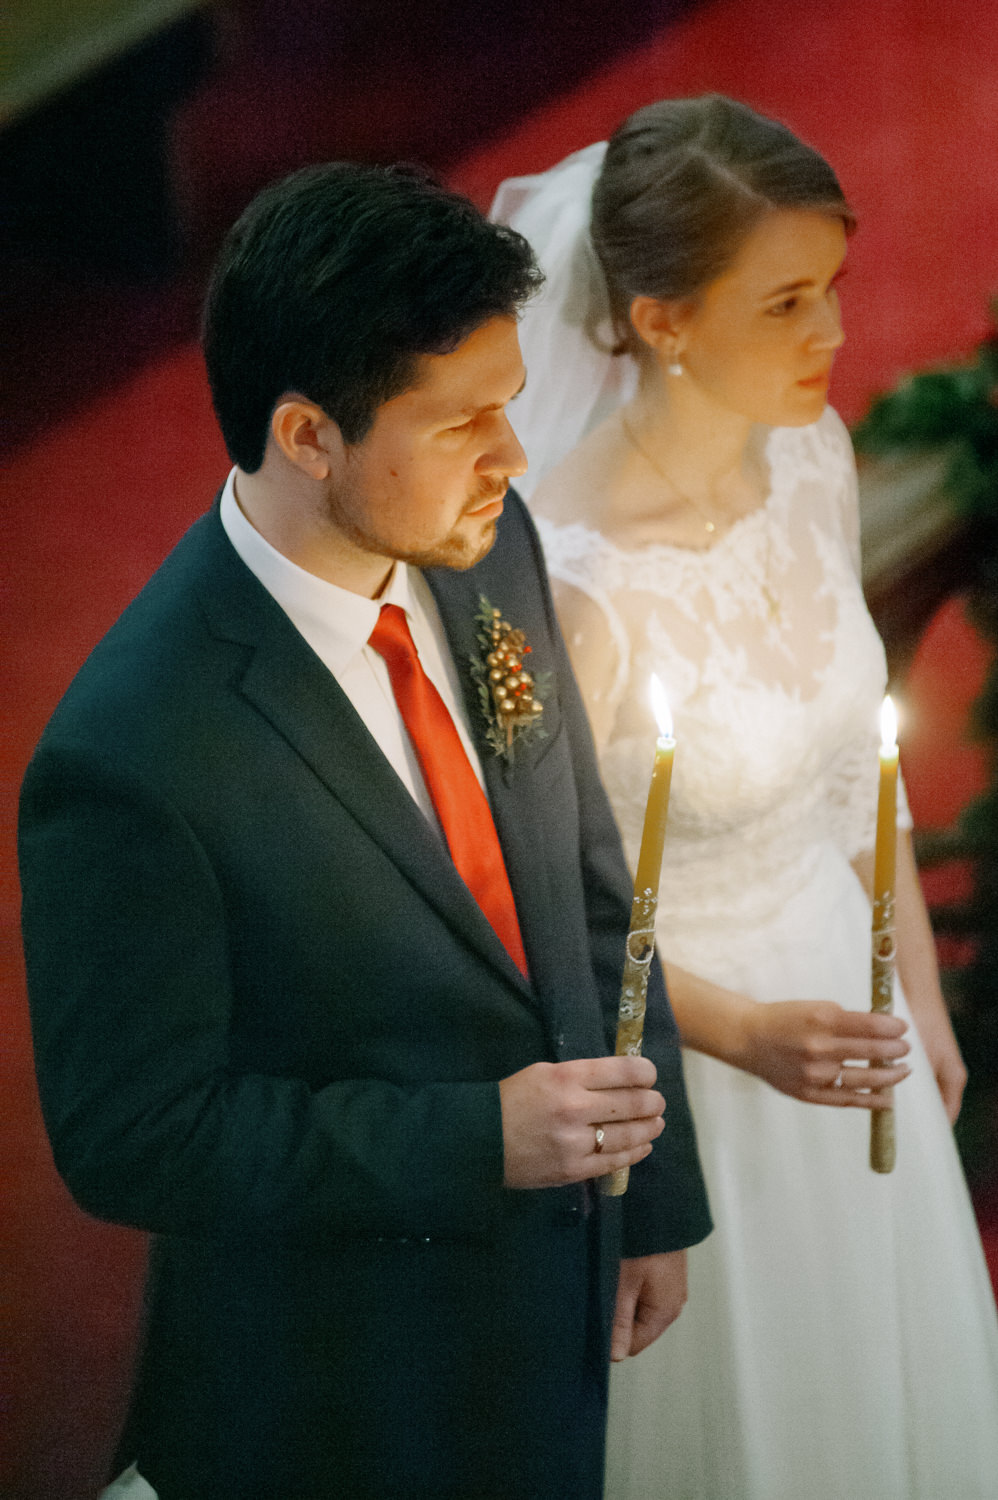 St. Louis wedding at St. Nicholas Greek Orthodox Church